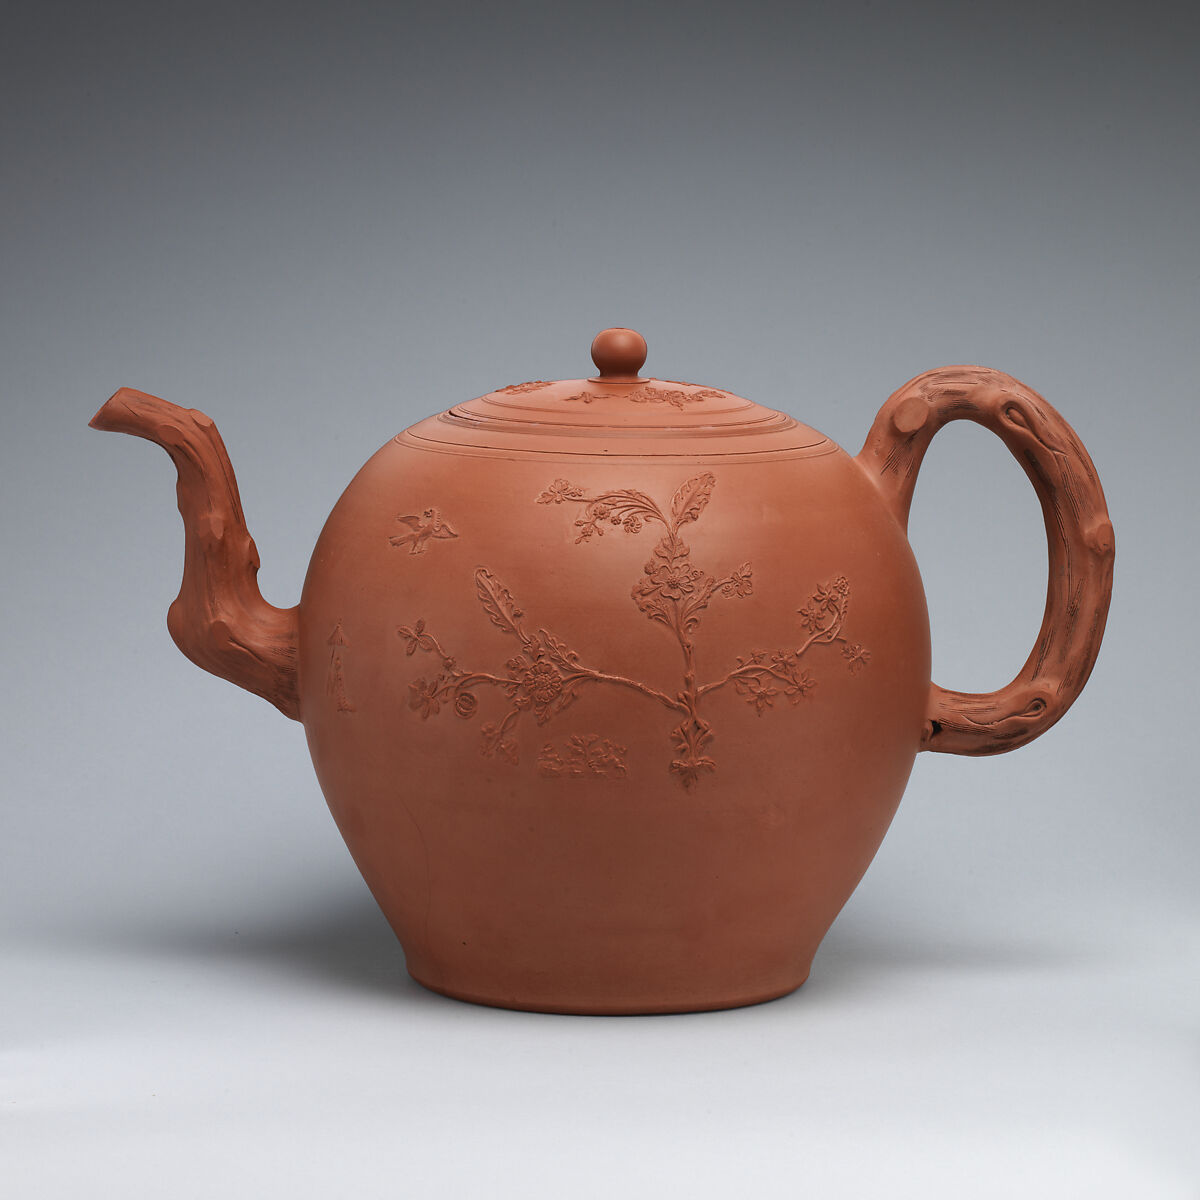 Punch pot with cover, Josiah Wedgwood (British, Burslem, Stoke-on-Trent 1730–1795 Burslem, Stoke-on-Trent), Red stoneware, British, possibly Burslem, Staffordshire 